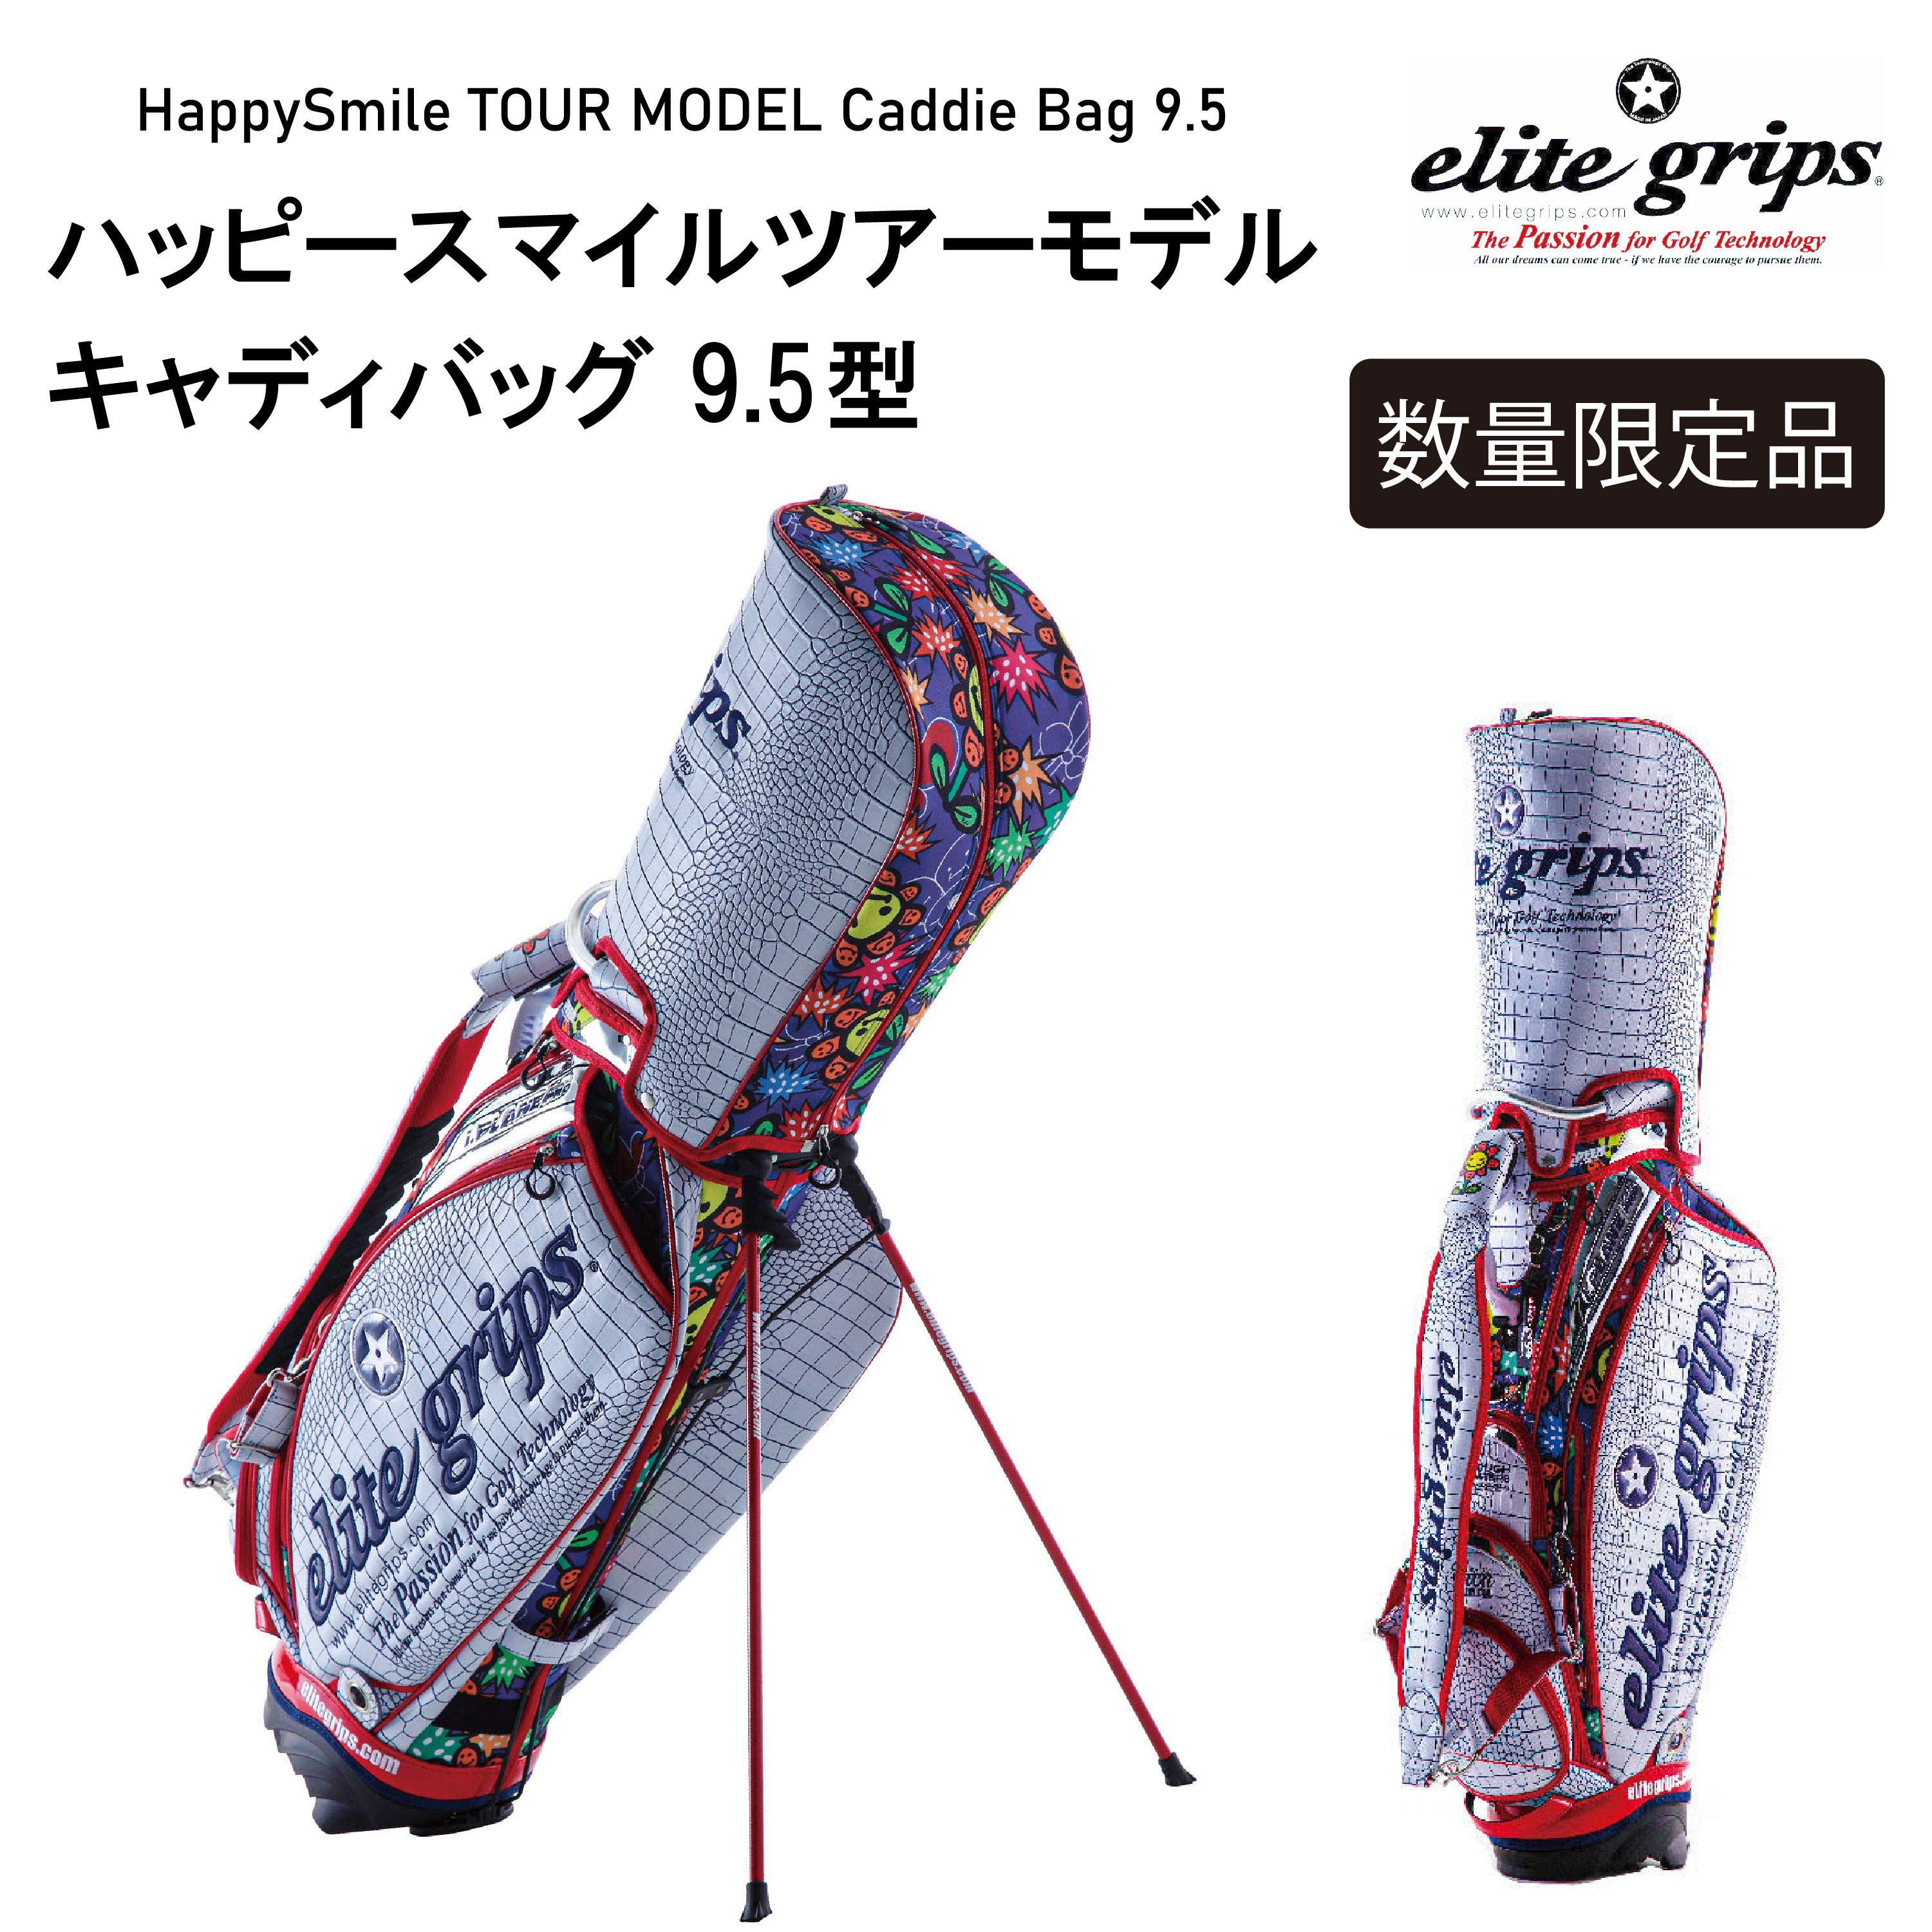 elite grips HappySmile TOUR MODEL Caddie Bag 9.5